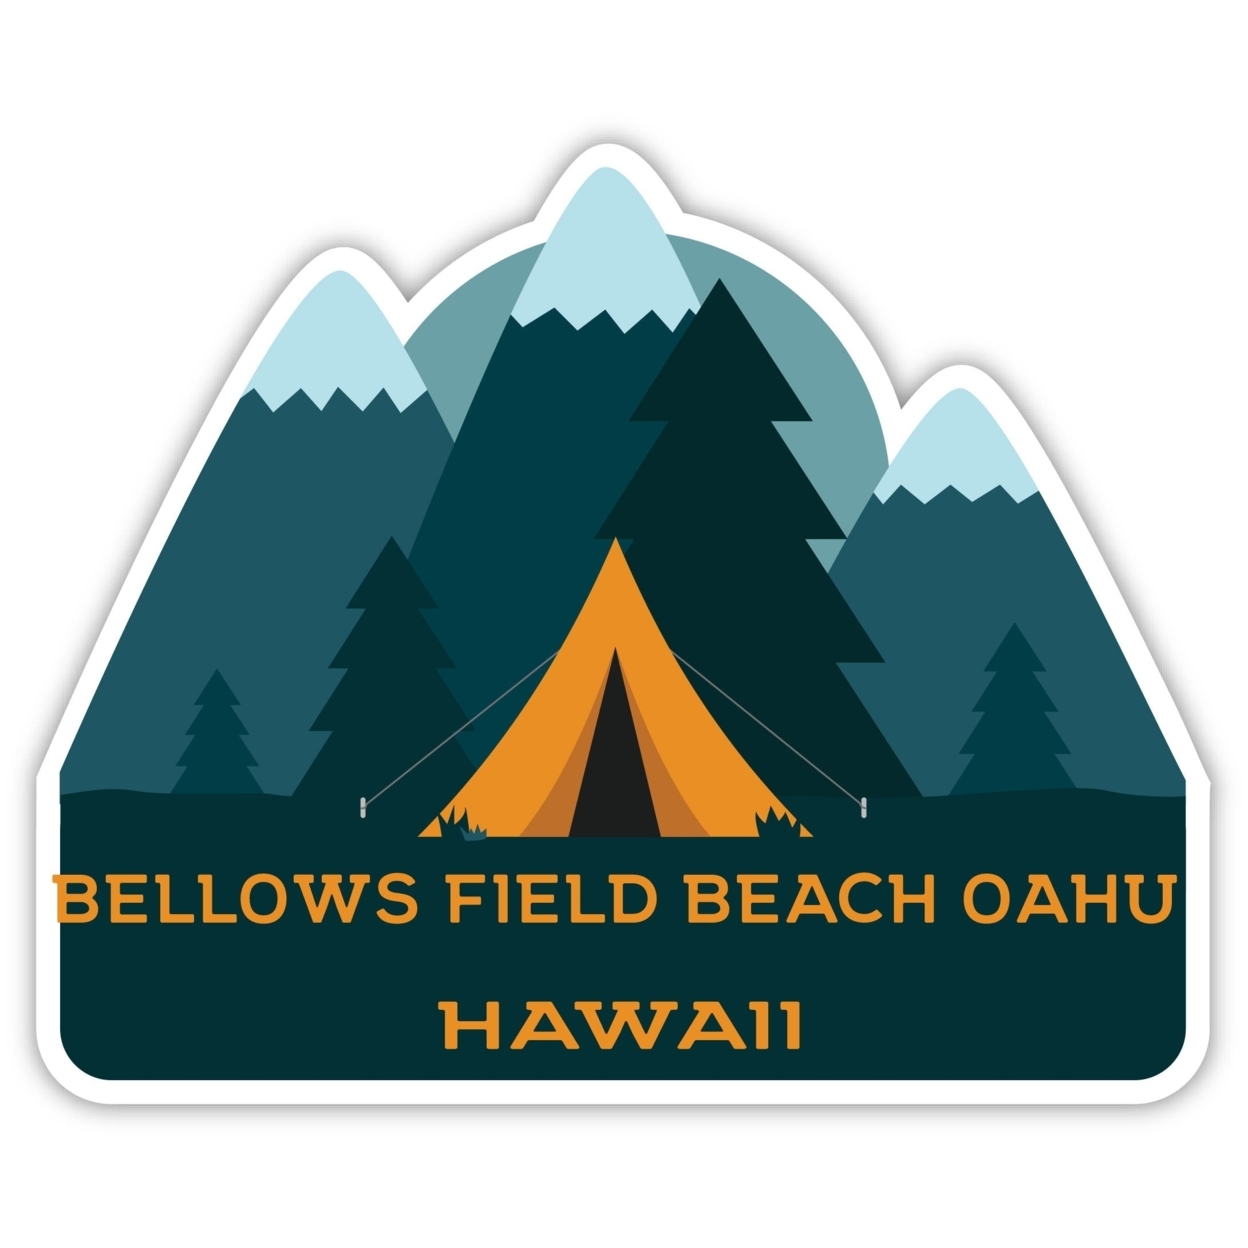 Bellows Field Beach Oahu Hawaii Souvenir Decorative Stickers (Choose Theme And Size) - Single Unit, 6-Inch, Tent